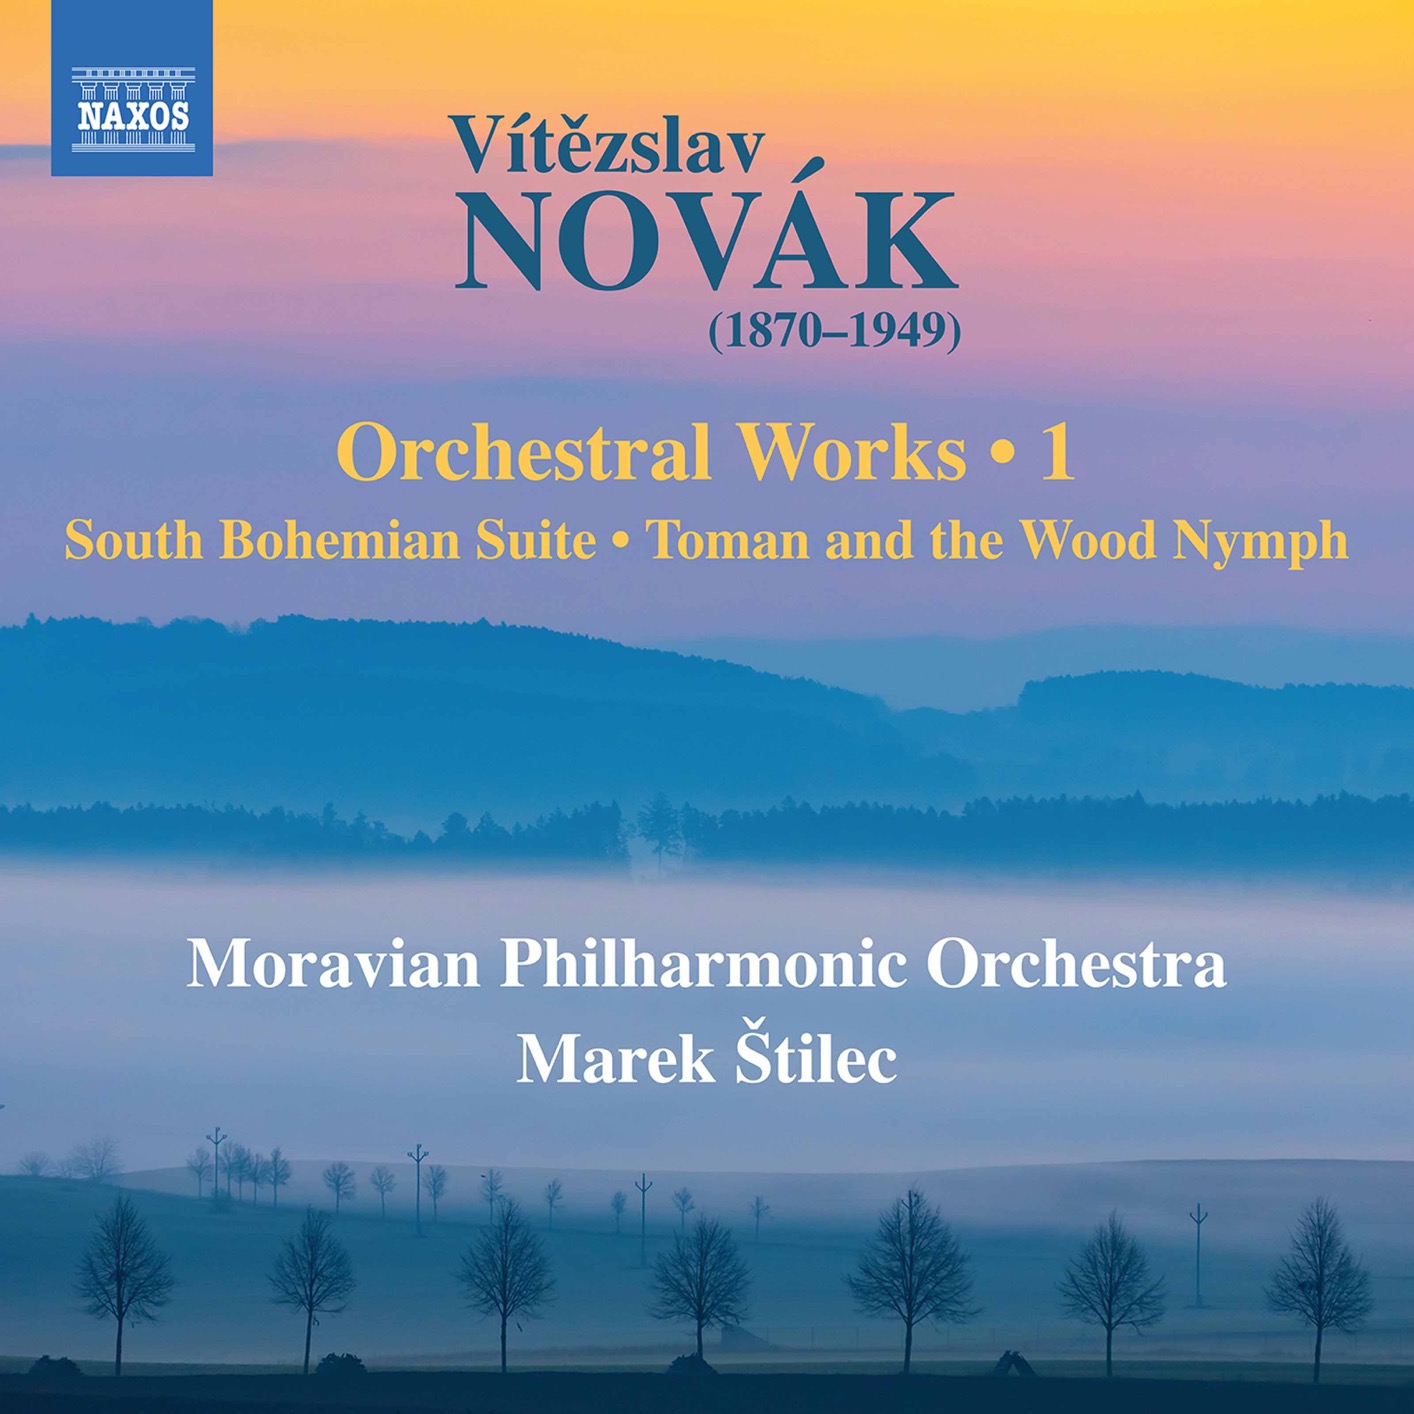 Moravian Philharmonic Orchestra & Marek Stilec - Novak - Orchestral Works, Vol. 1 (2020) [FLAC 24bit/96kHz]